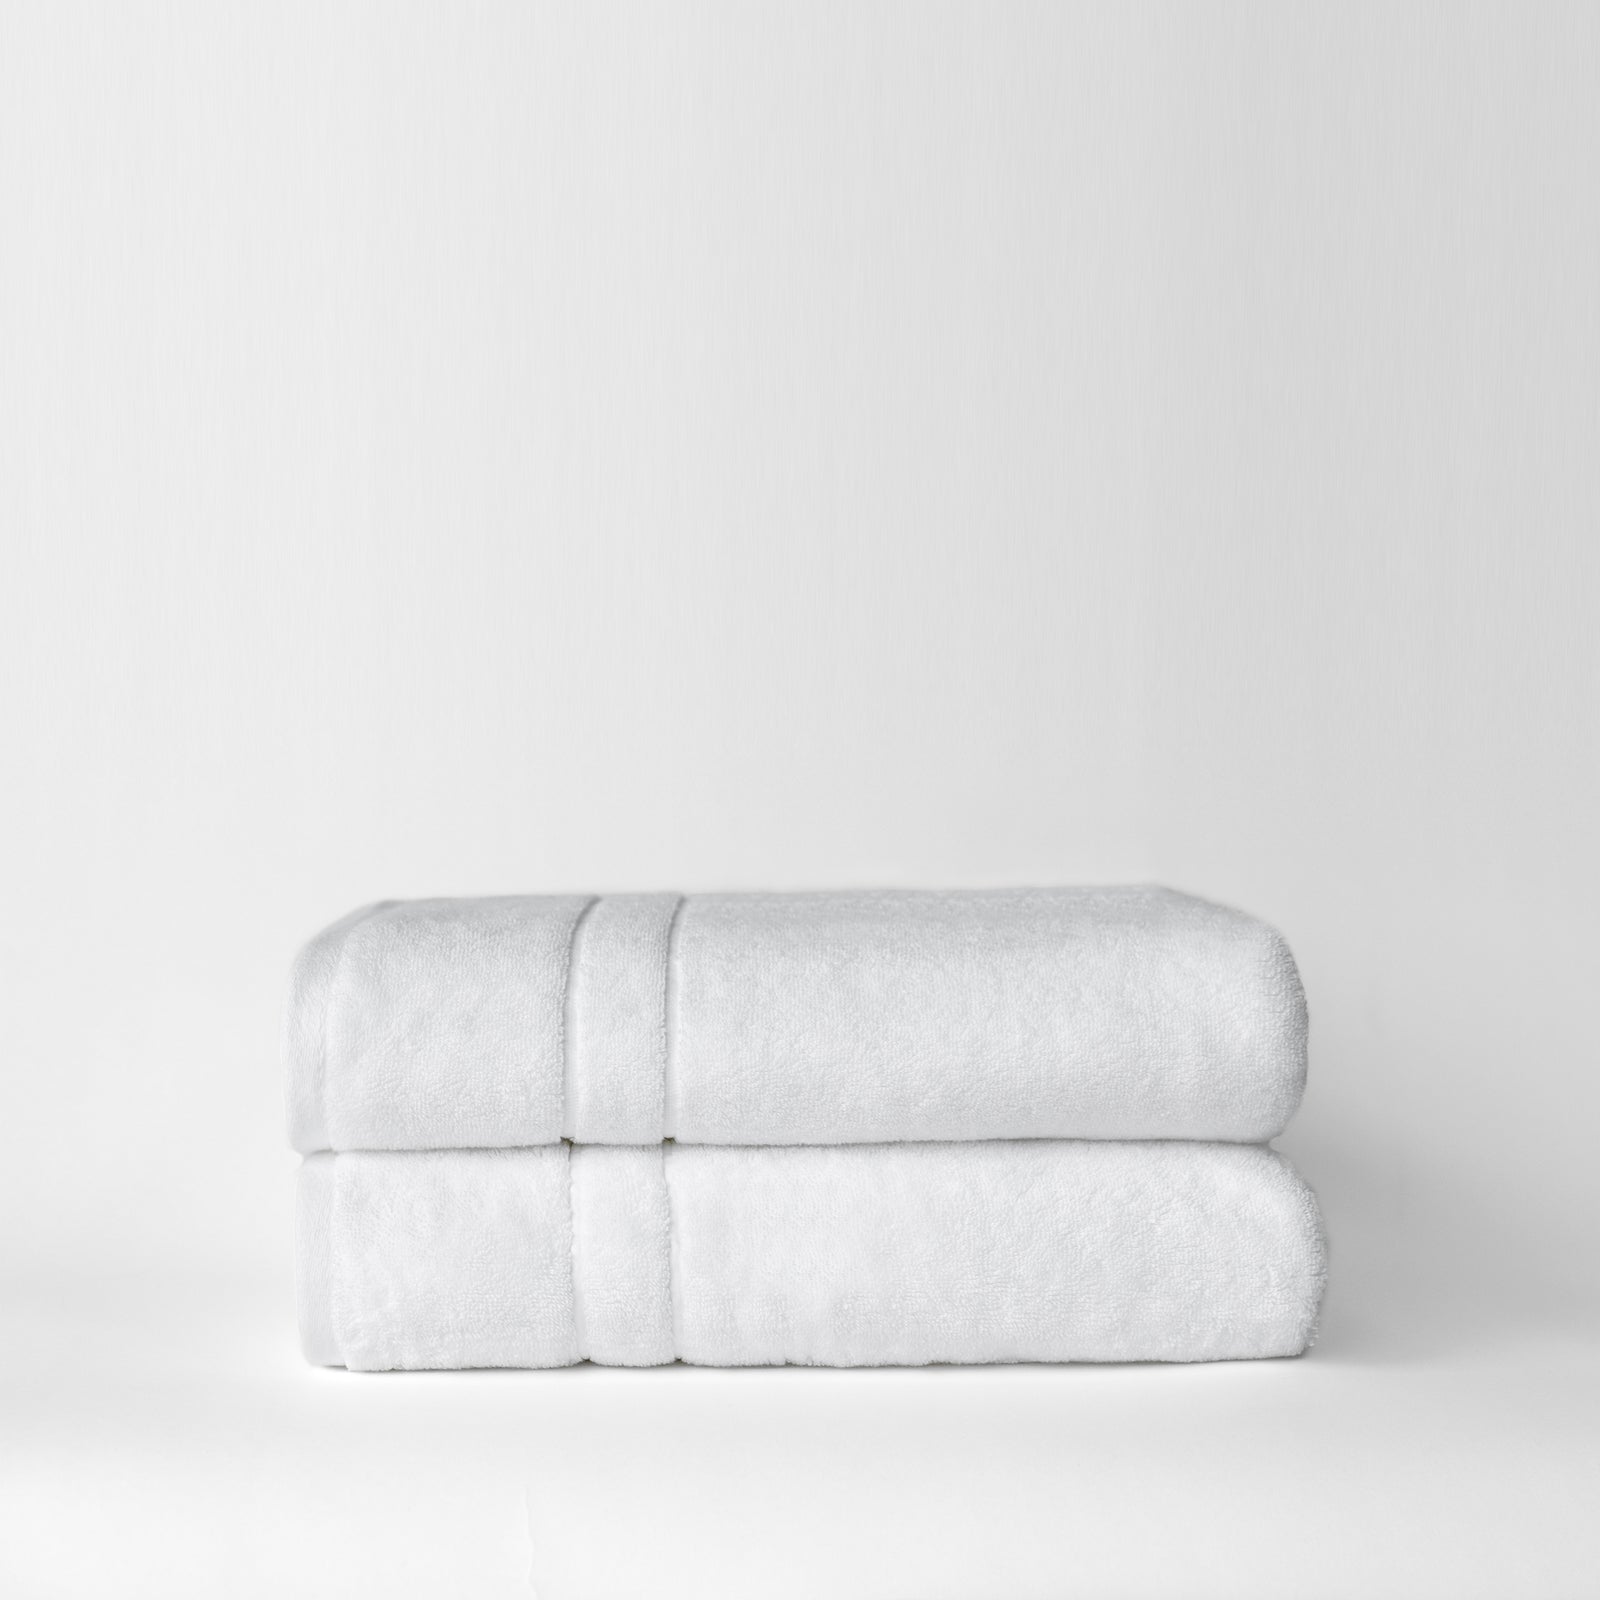 Premium Plush Bath Towels in the color White. Photo of Complete Premium Plush Bath Bundle taken with white background 